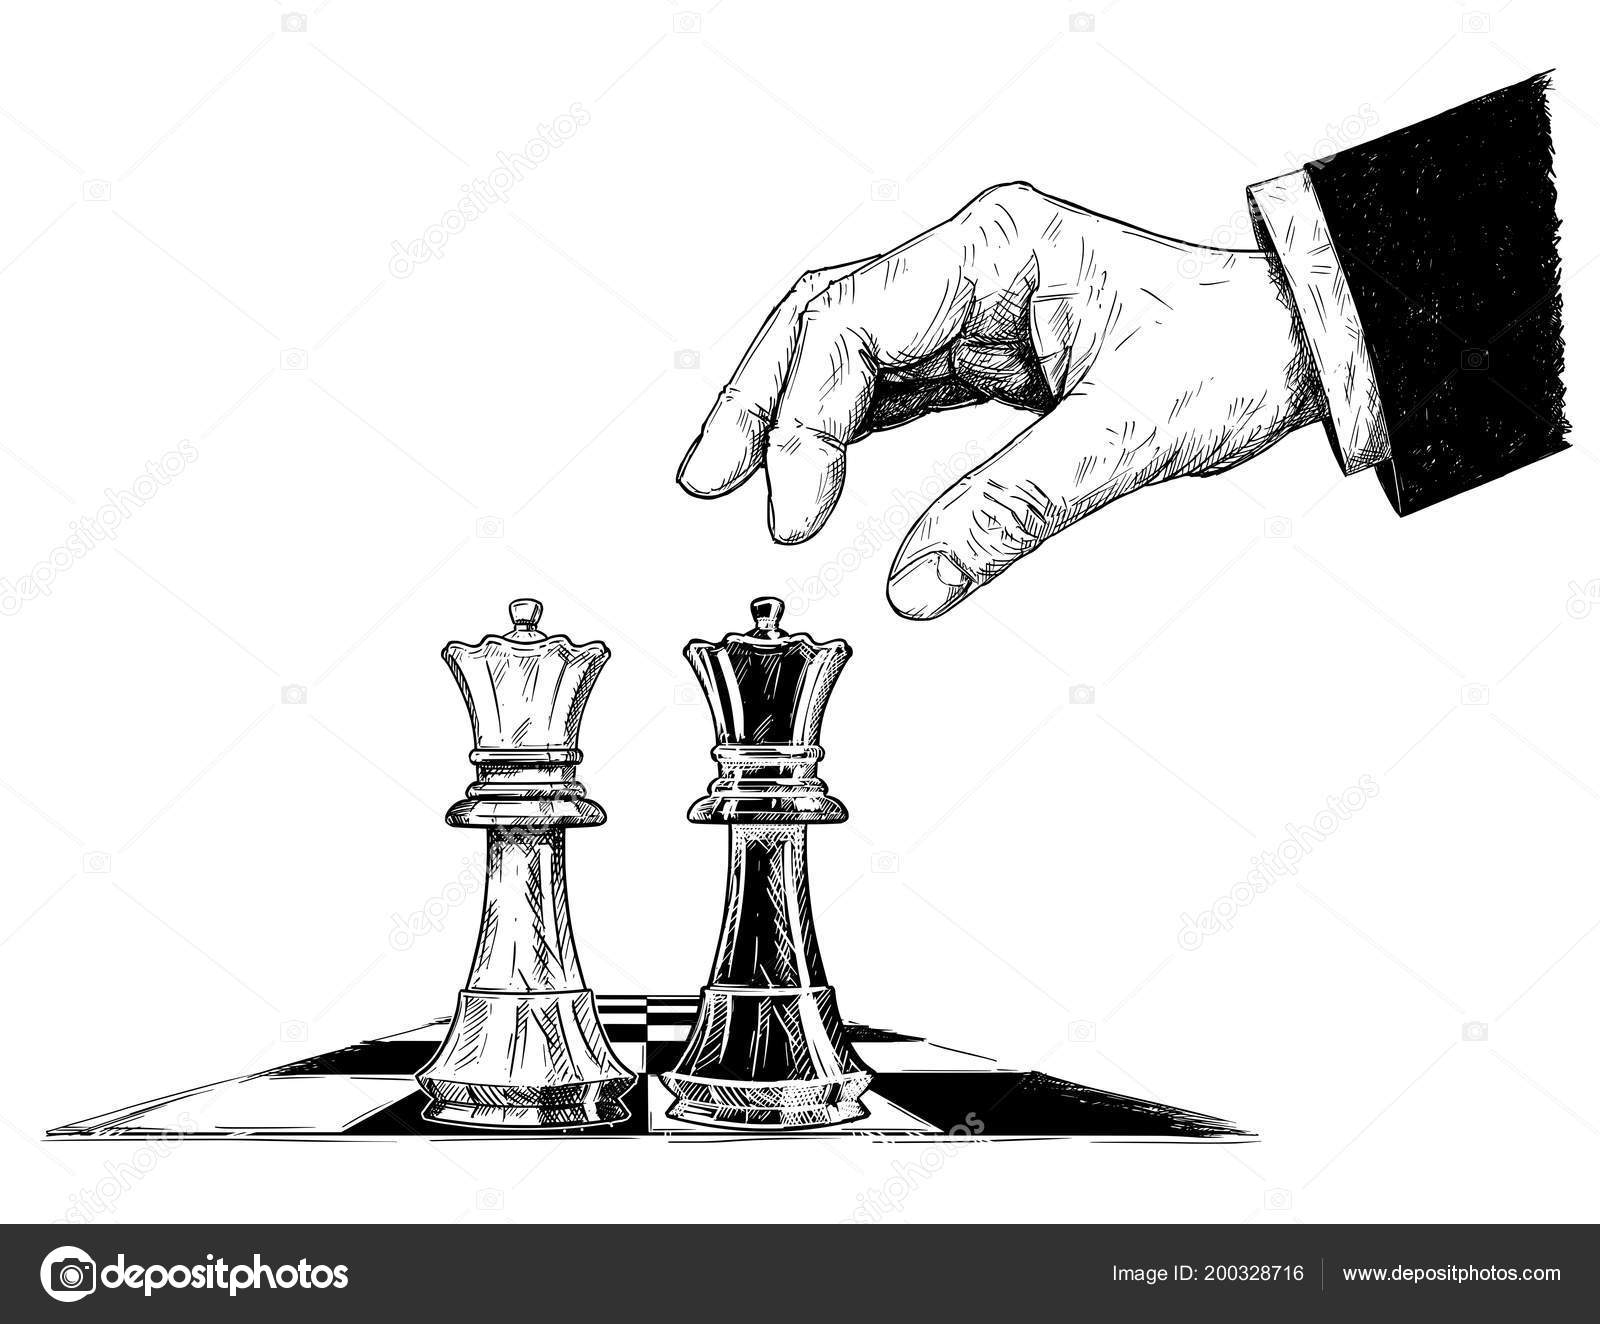 Fundo de pontos xadrez xadrez tinta preta e branca desenhada à mão